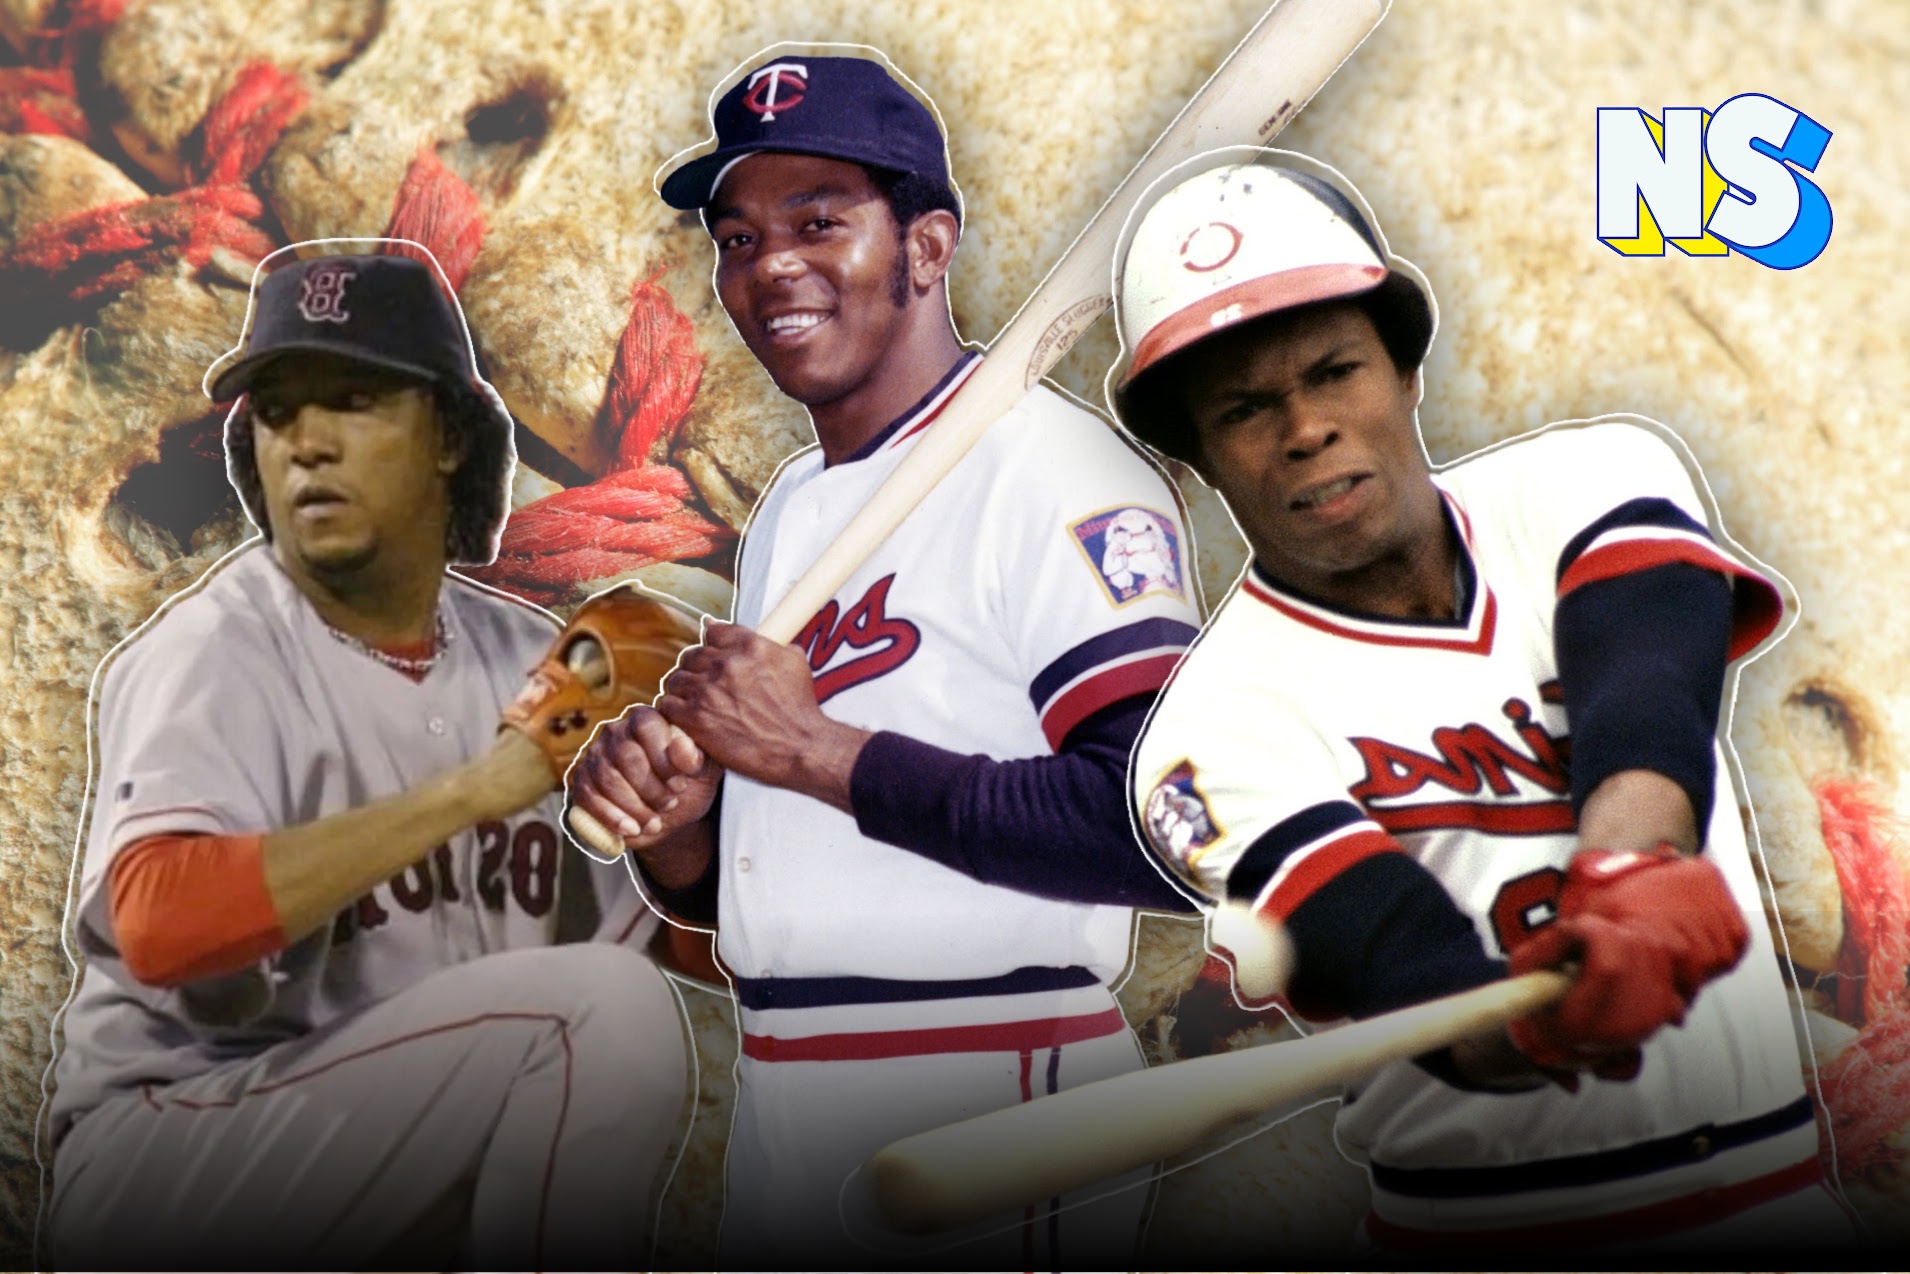 afro-latino baseball players nuestro stories